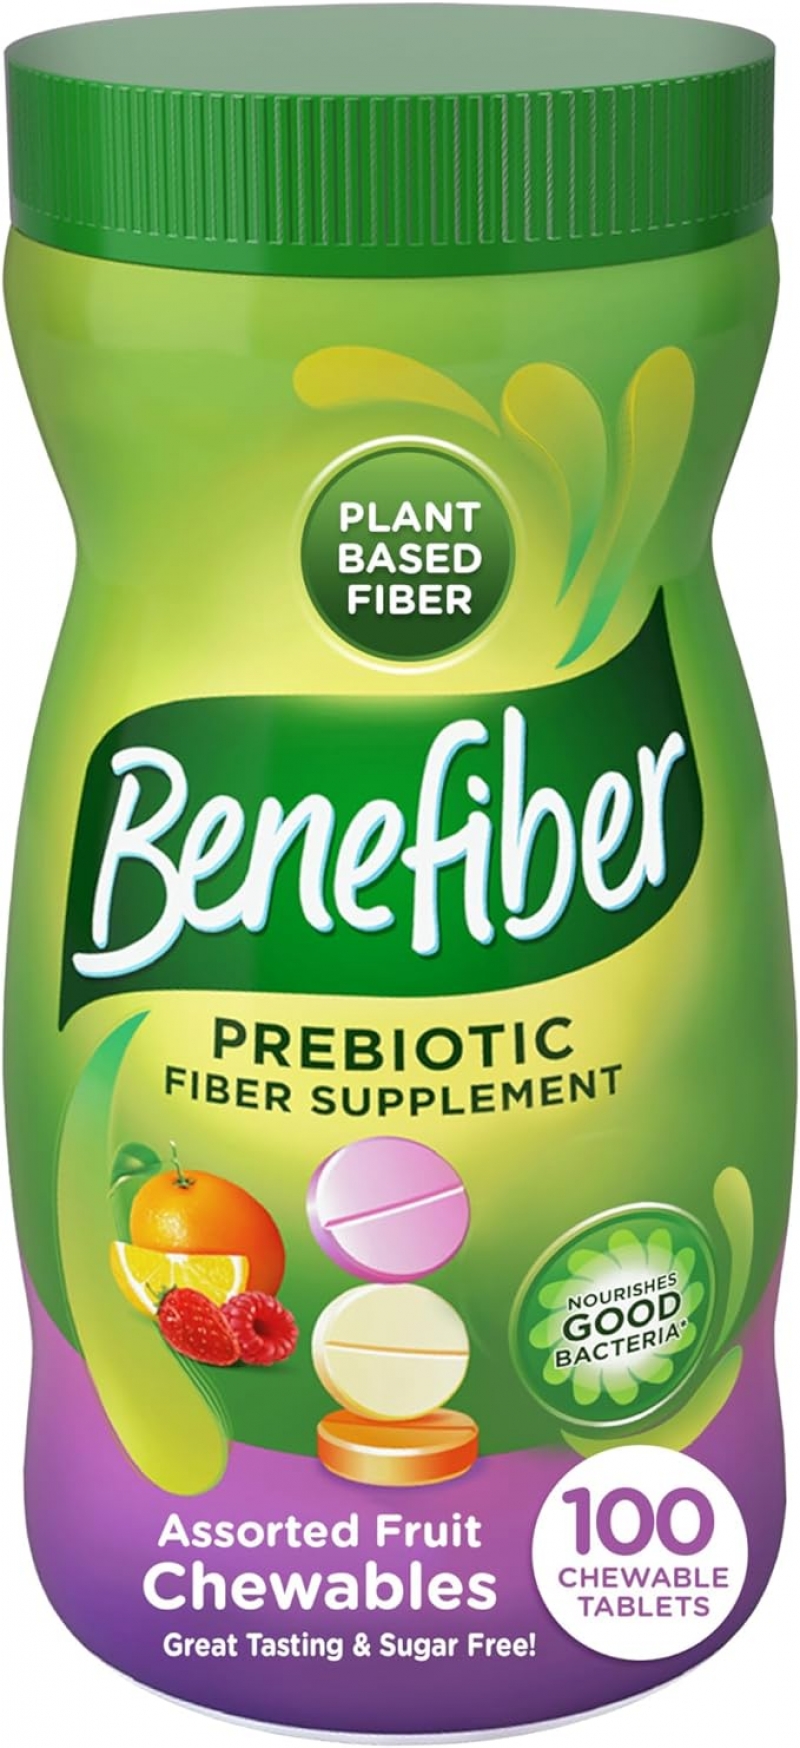 ihocon: Benefiber Chewable Prebiotic Fiber Supplement Tablets for Digestive Health, Assorted Fruit Flavors - 100 Count   嚼式益生元纤维补充剂 100粒